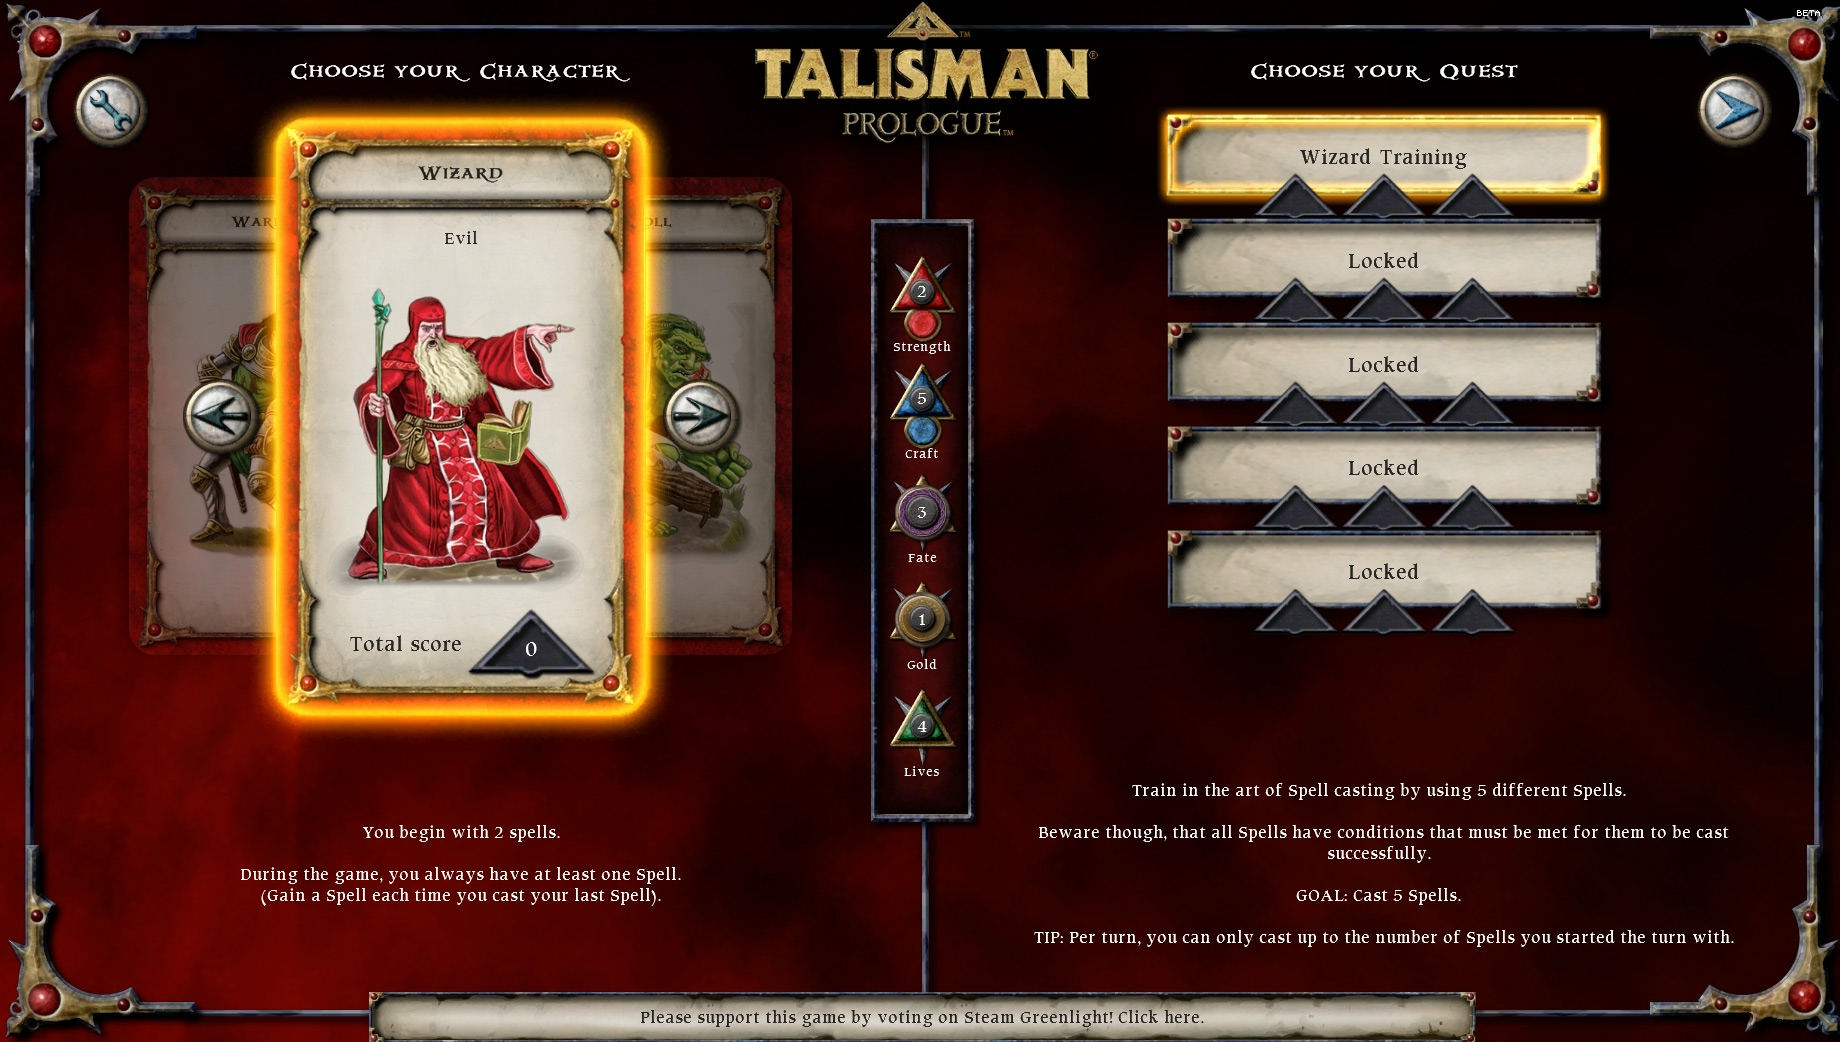 Talisman: The Legendary Adventure Bundle Steam CD Key 67.79 USD